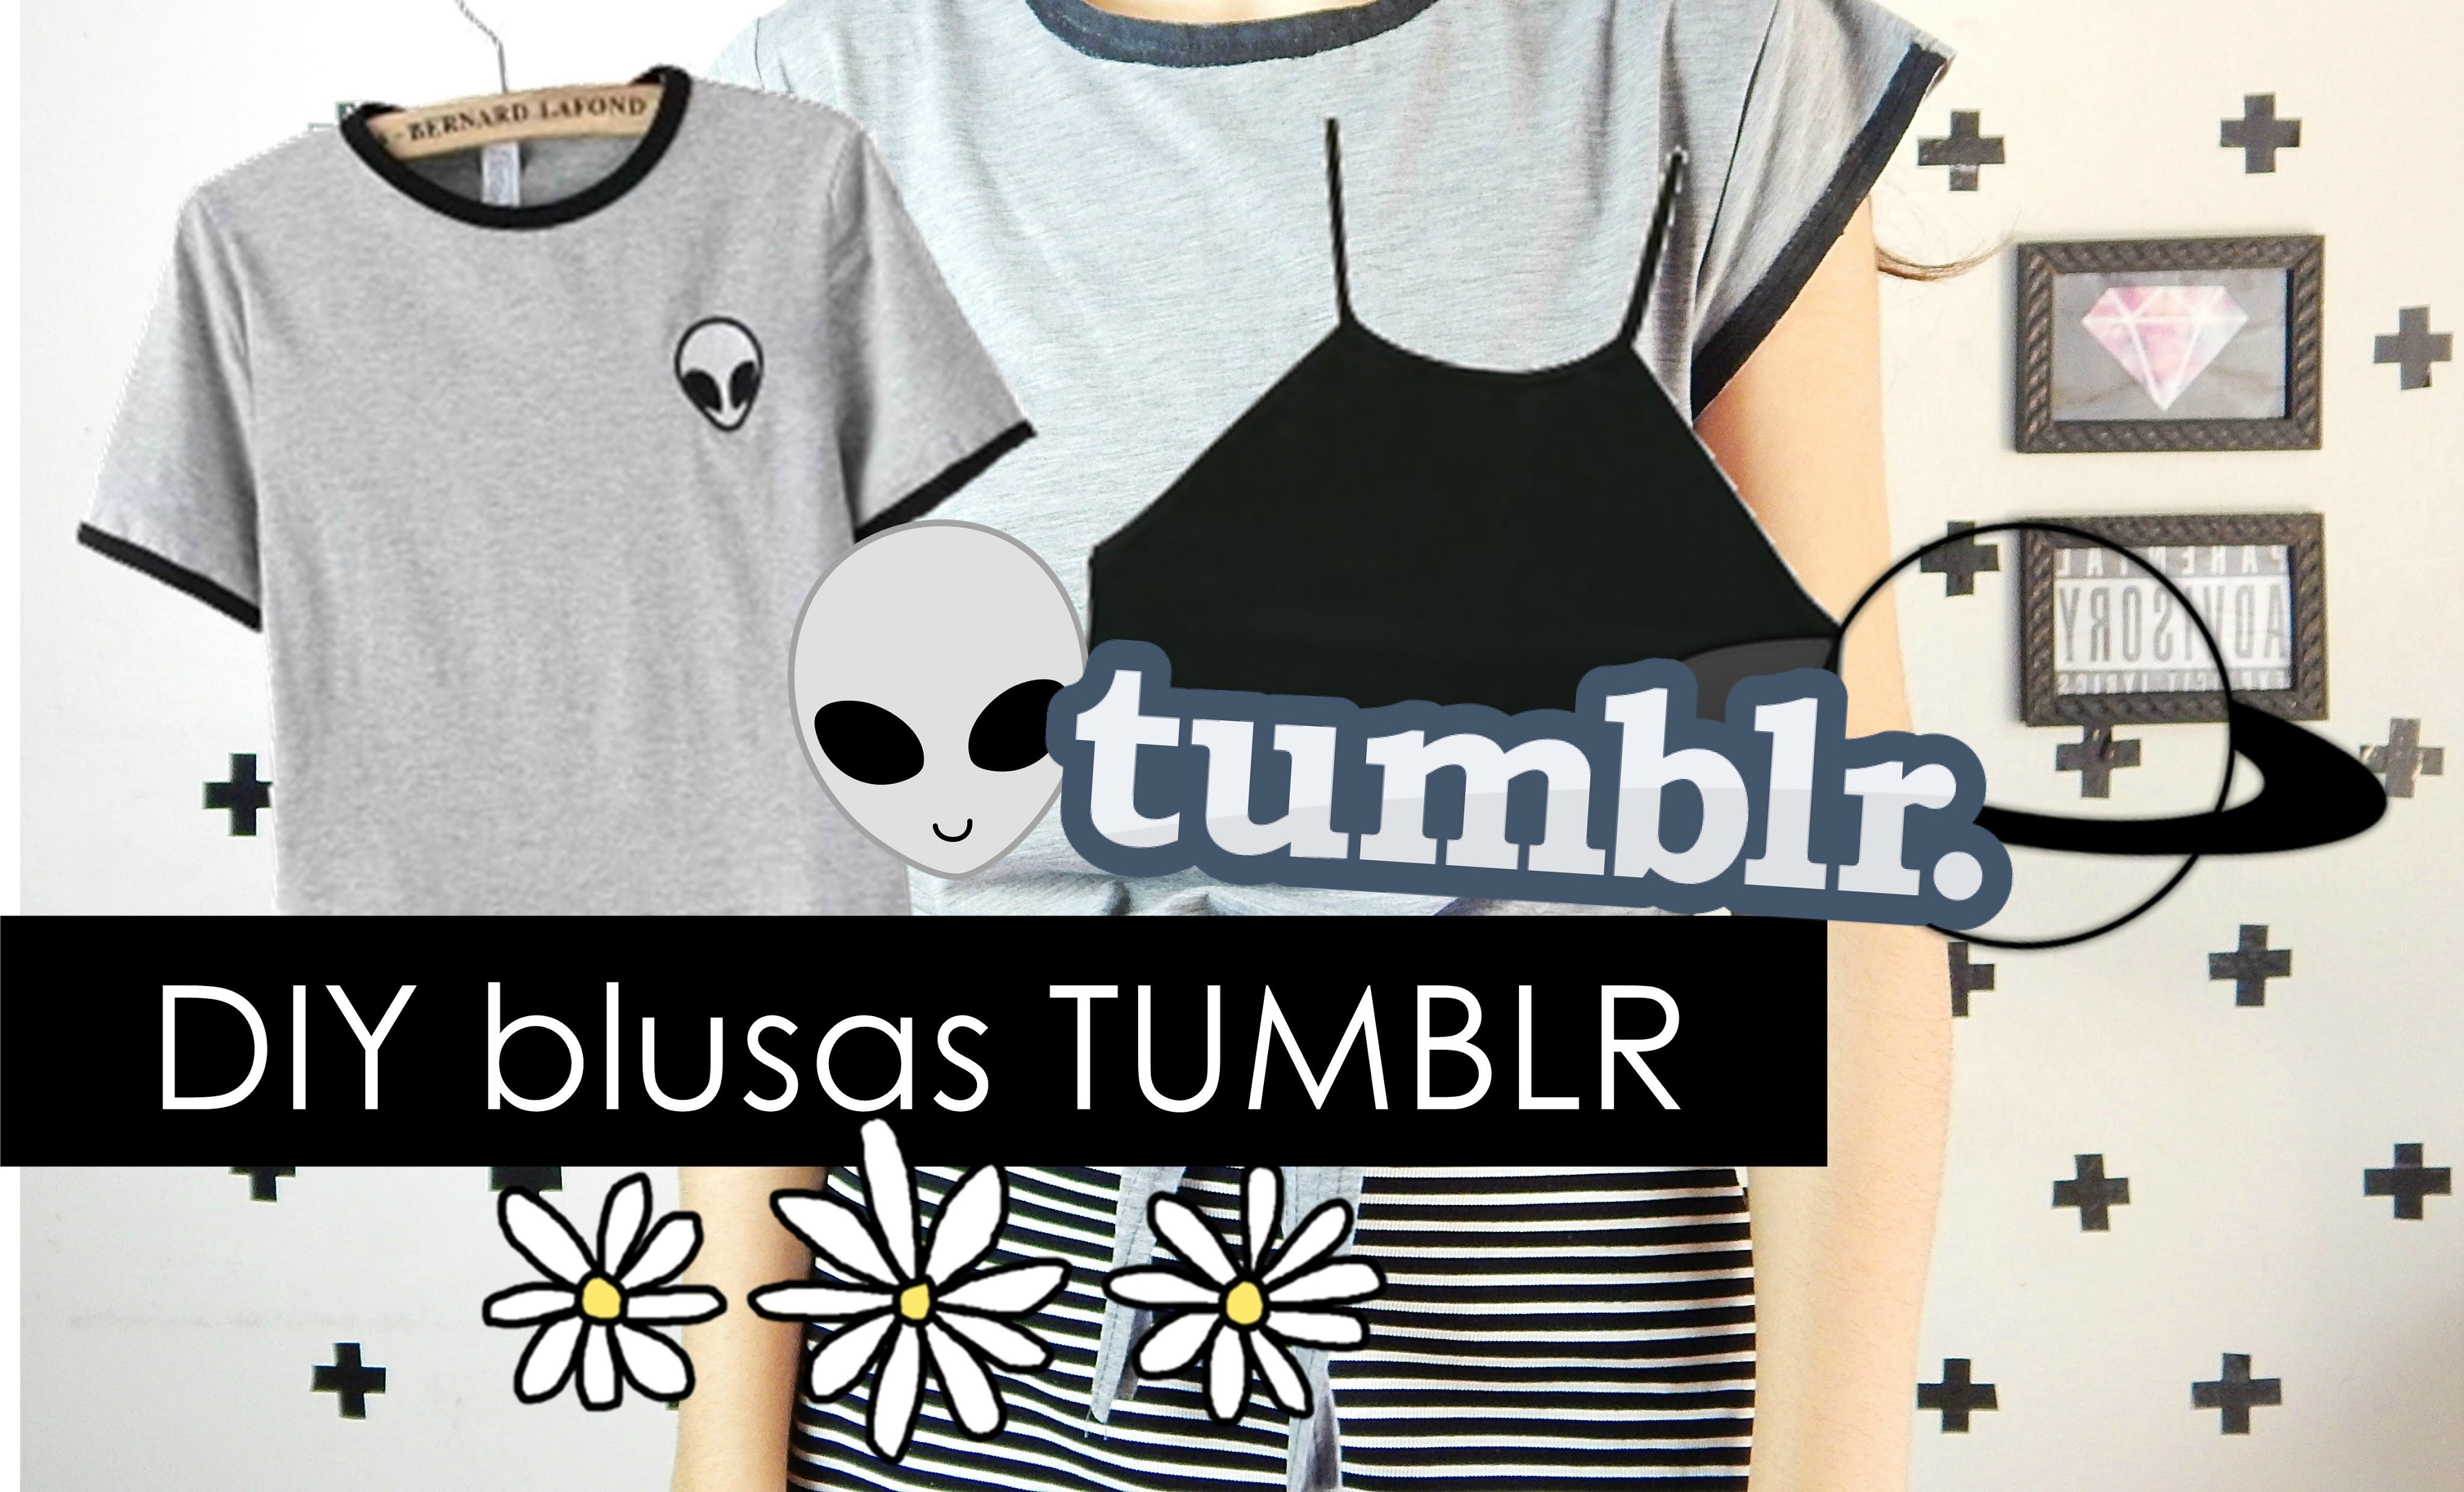 DIY-Blusas inspiradas no Tumblr-Inspired Tumblr |Camyla lima